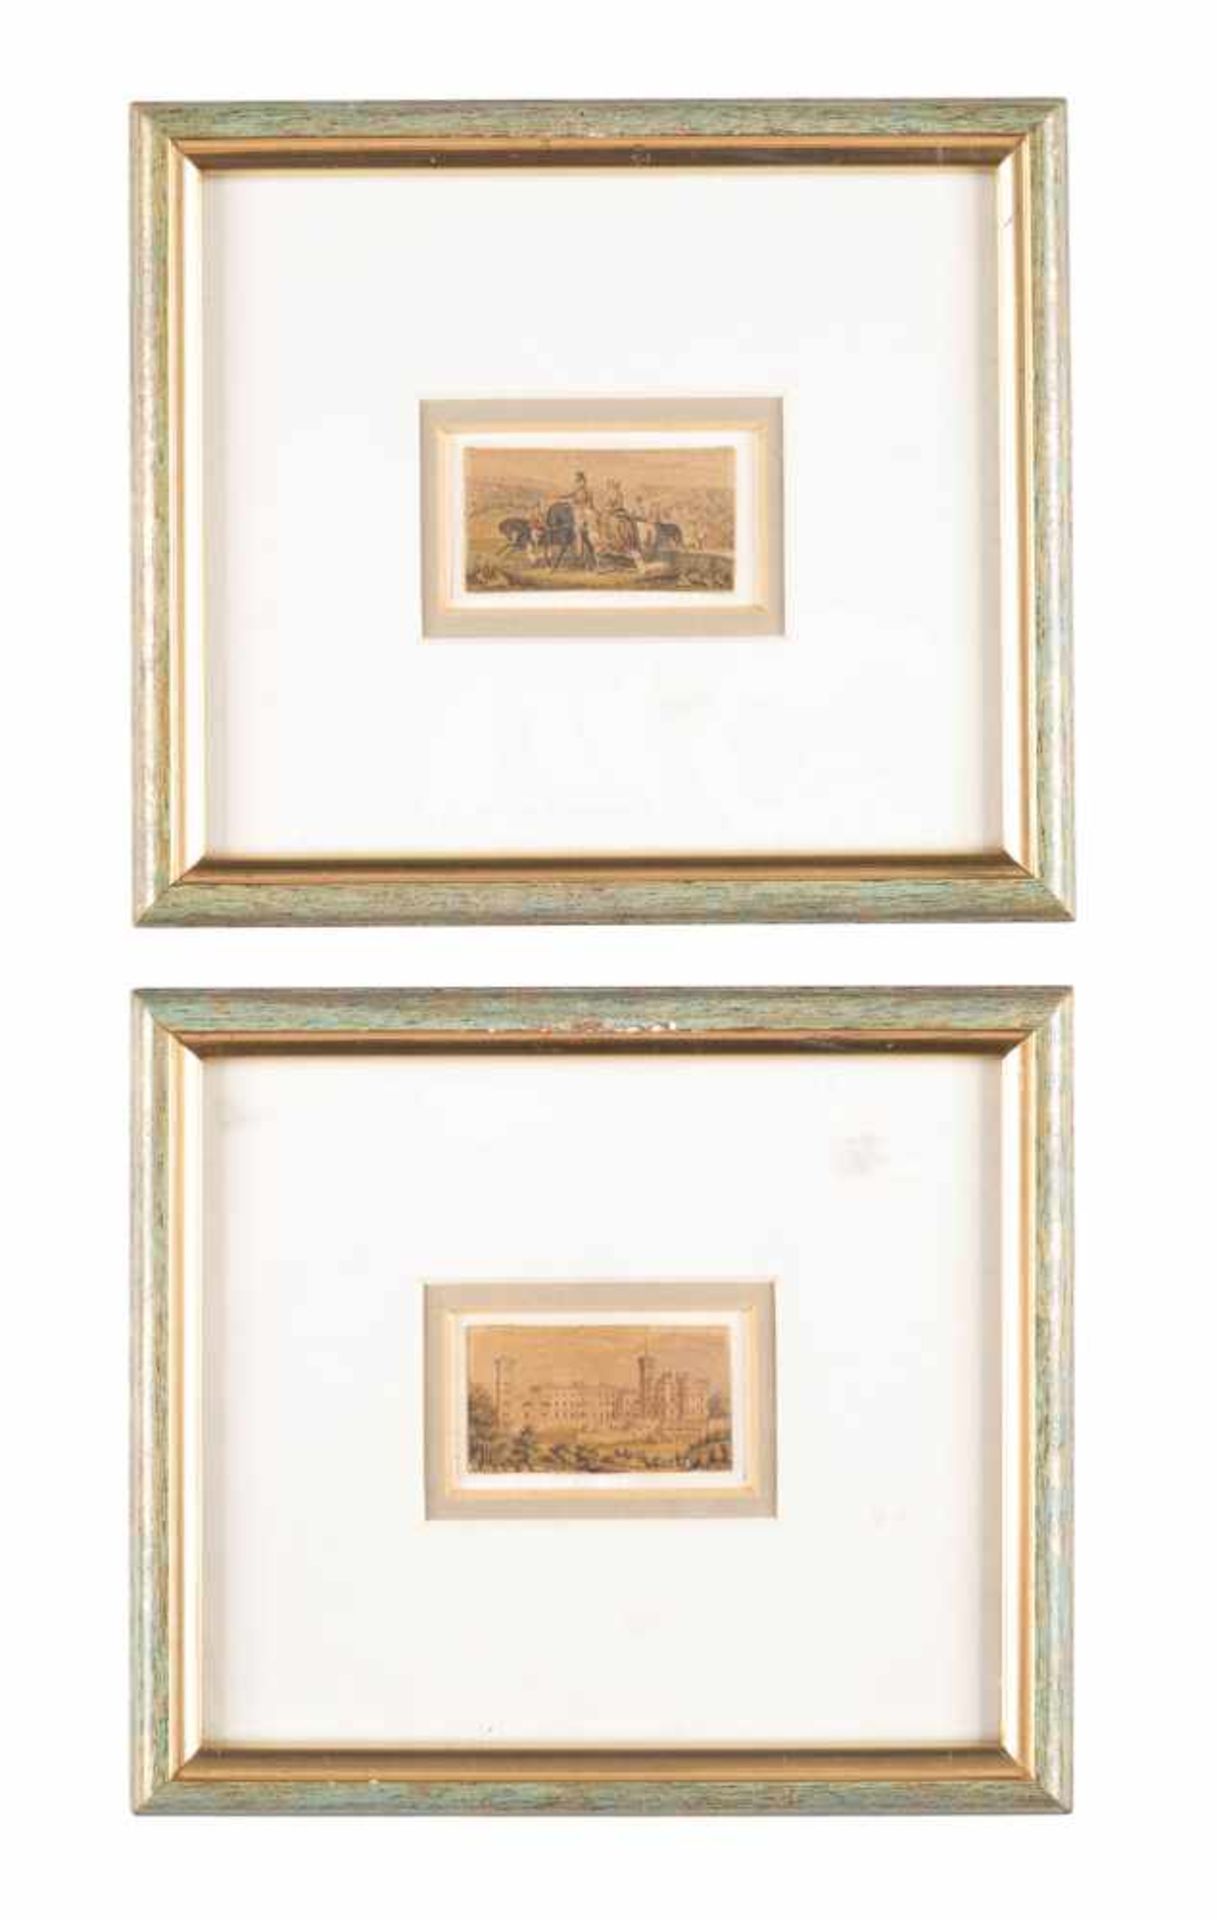 ZWEI LUPENMALEREIEN England, um 1850 Tusche bzw. Silberstift, koloriert, auf Papier. 2,5 x 4,5 cm (